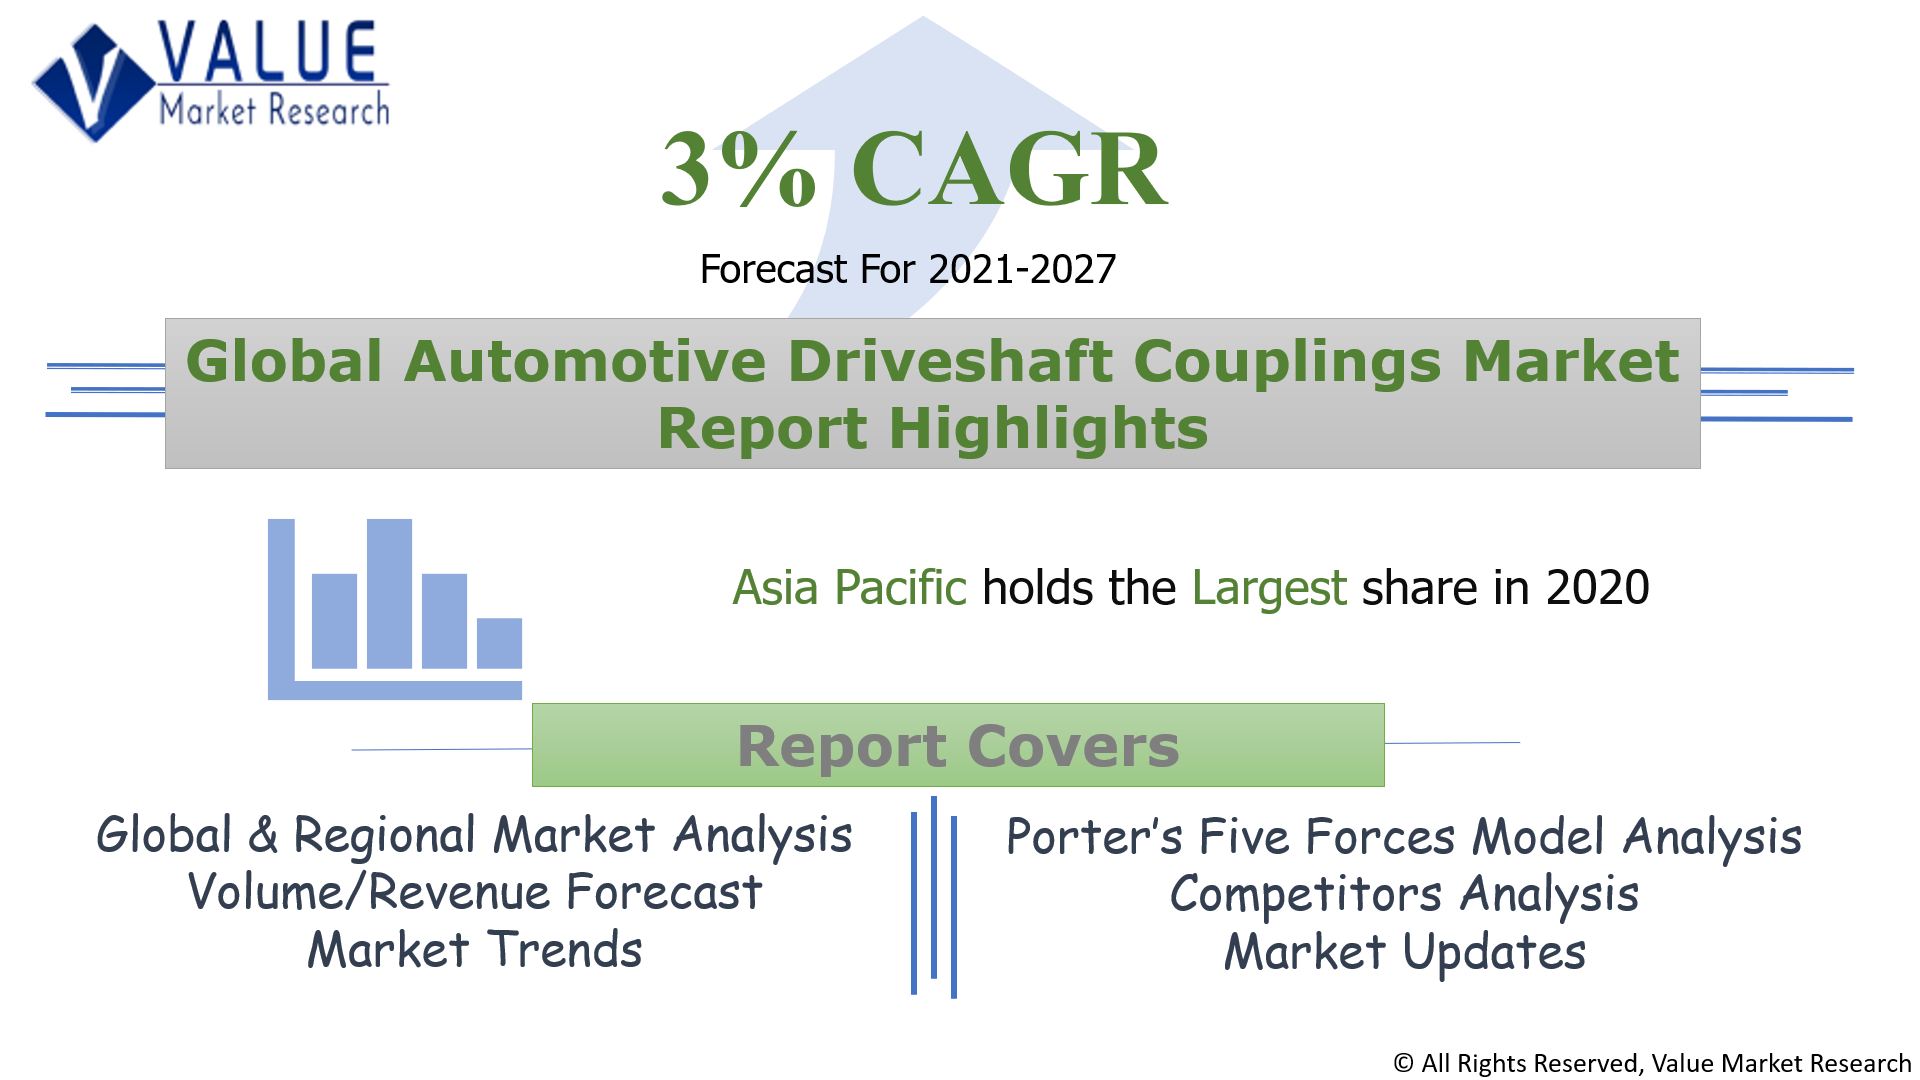 Global Automotive Driveshaft Couplings Market Share